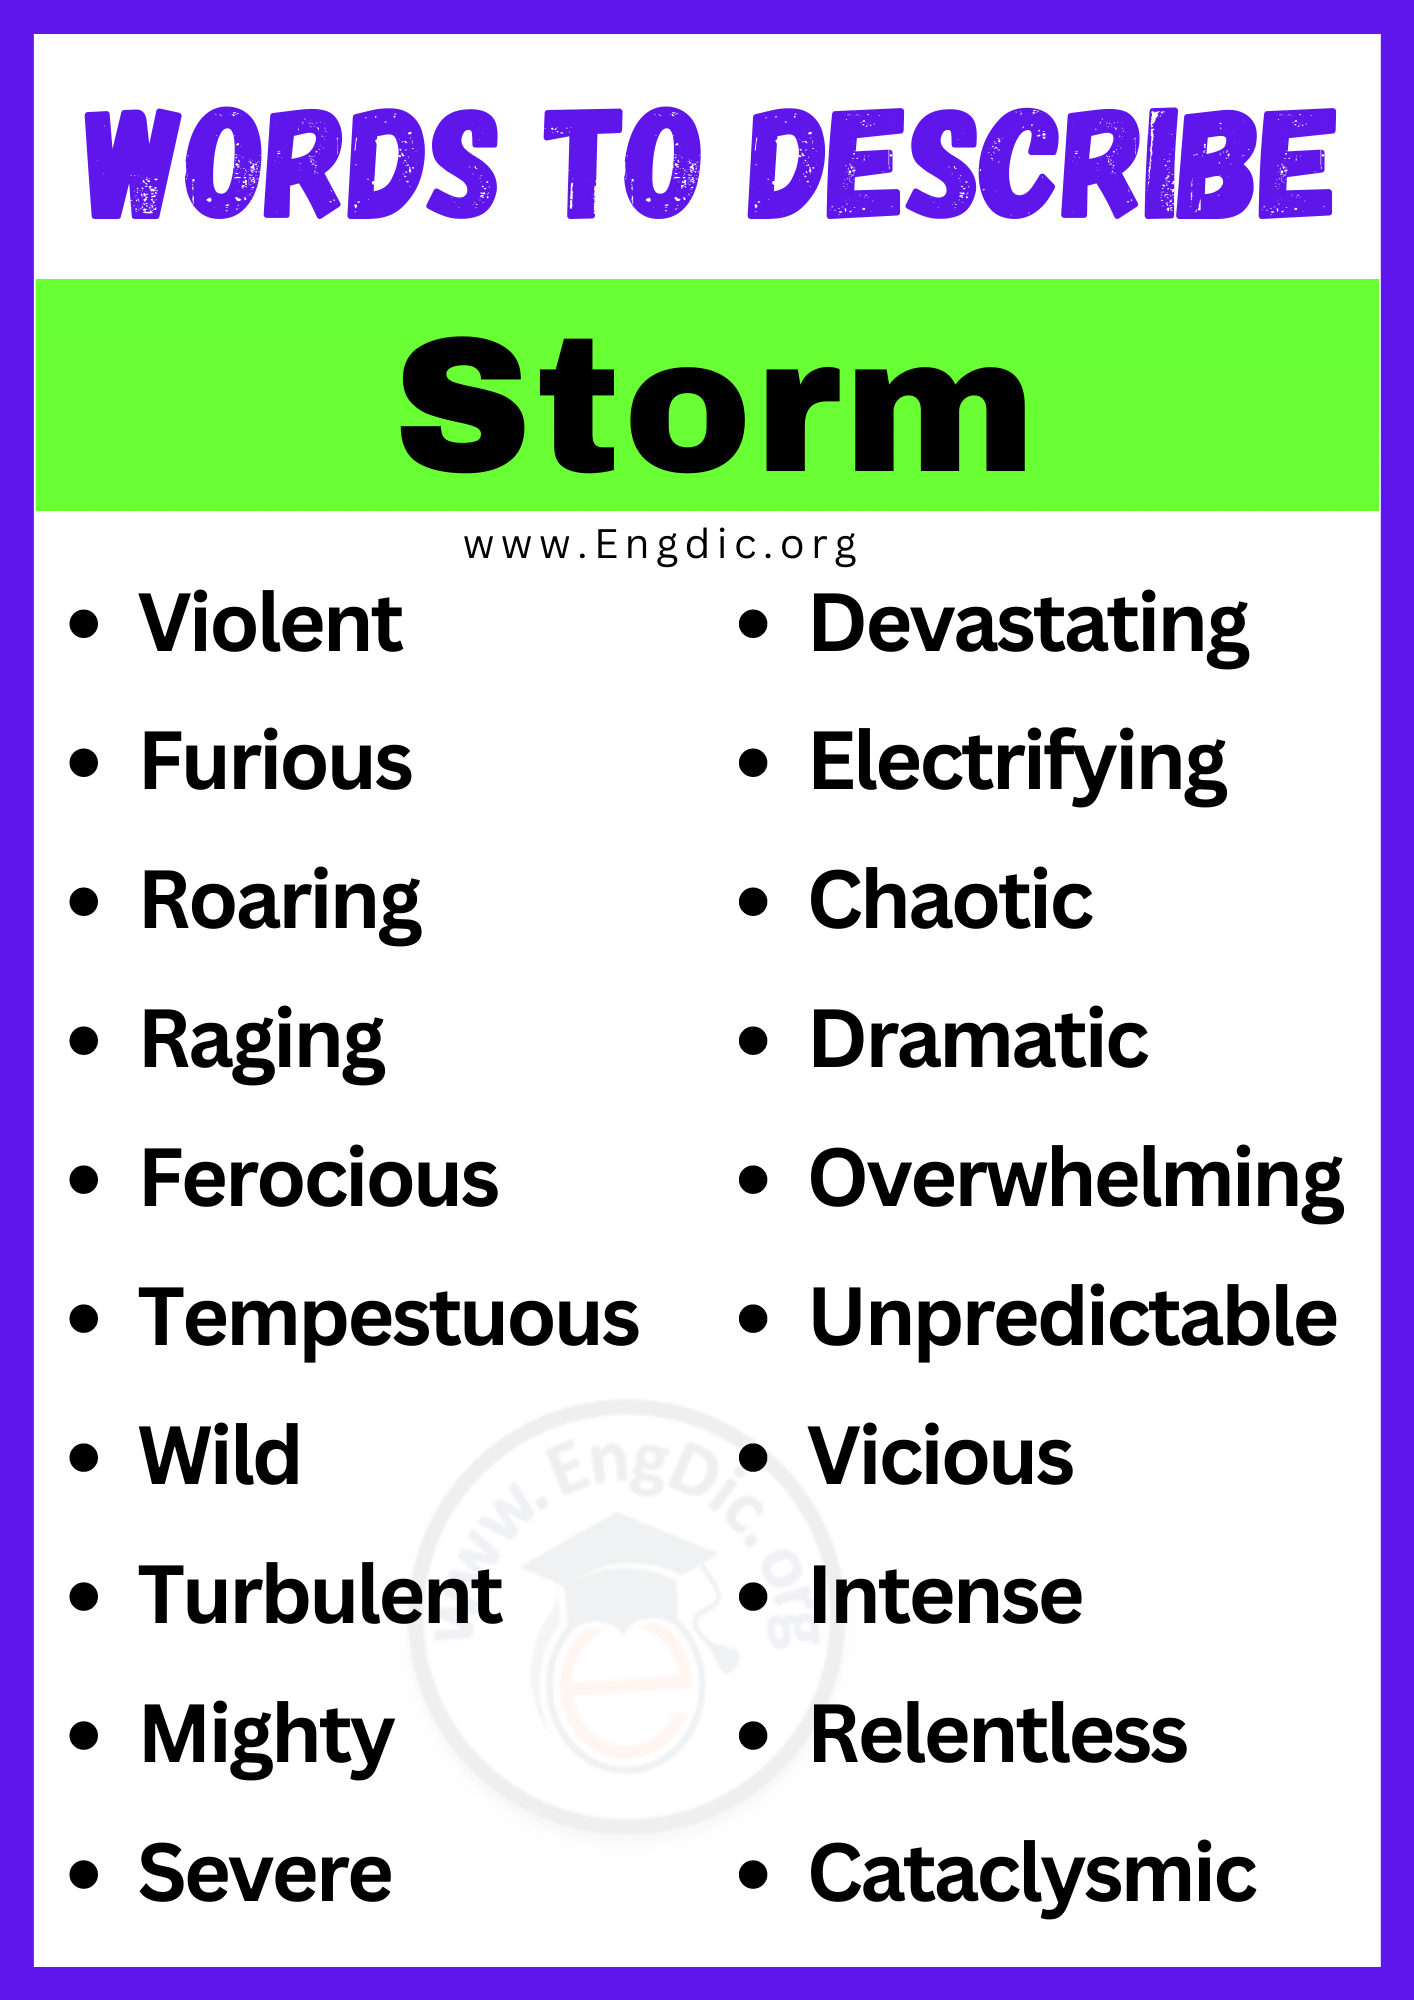 Words to Describe Storm